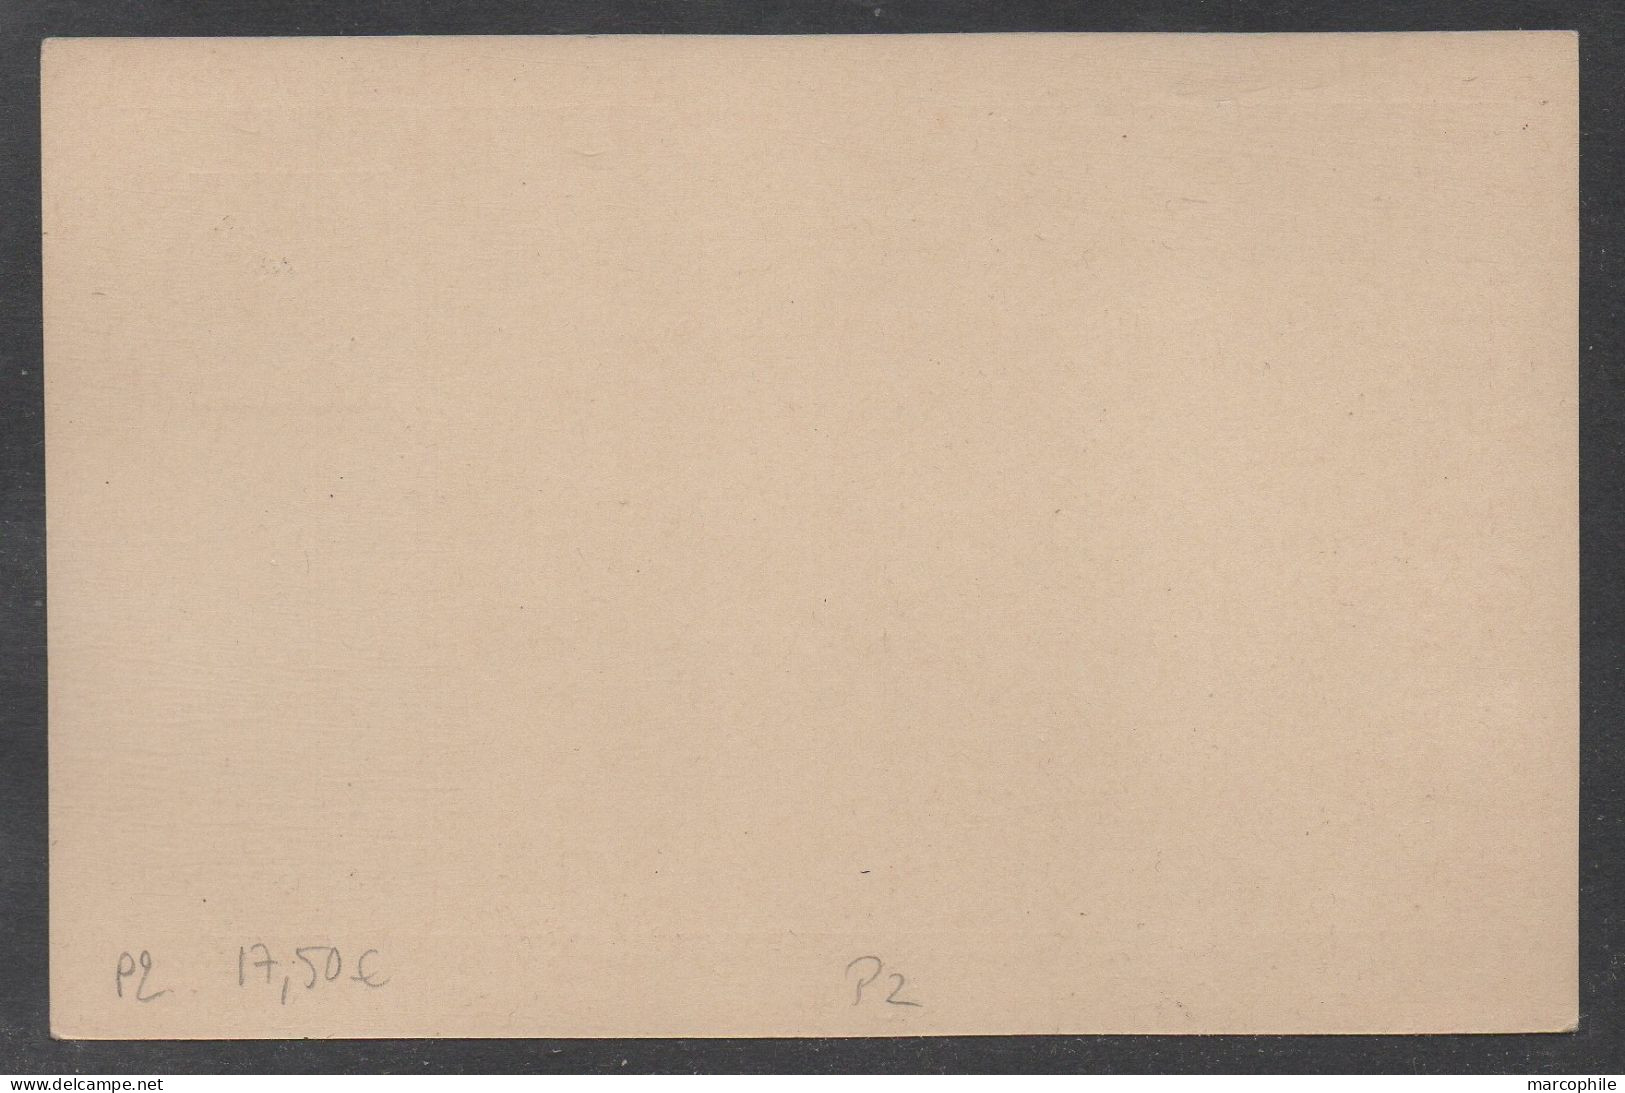 KAROLINEN -  CAROLINES / 1899 # P2 - GSK MIT  DATUM  - ENTIER POSTAL AVEC DATE / KW 17.50 EURO - Caroline Islands